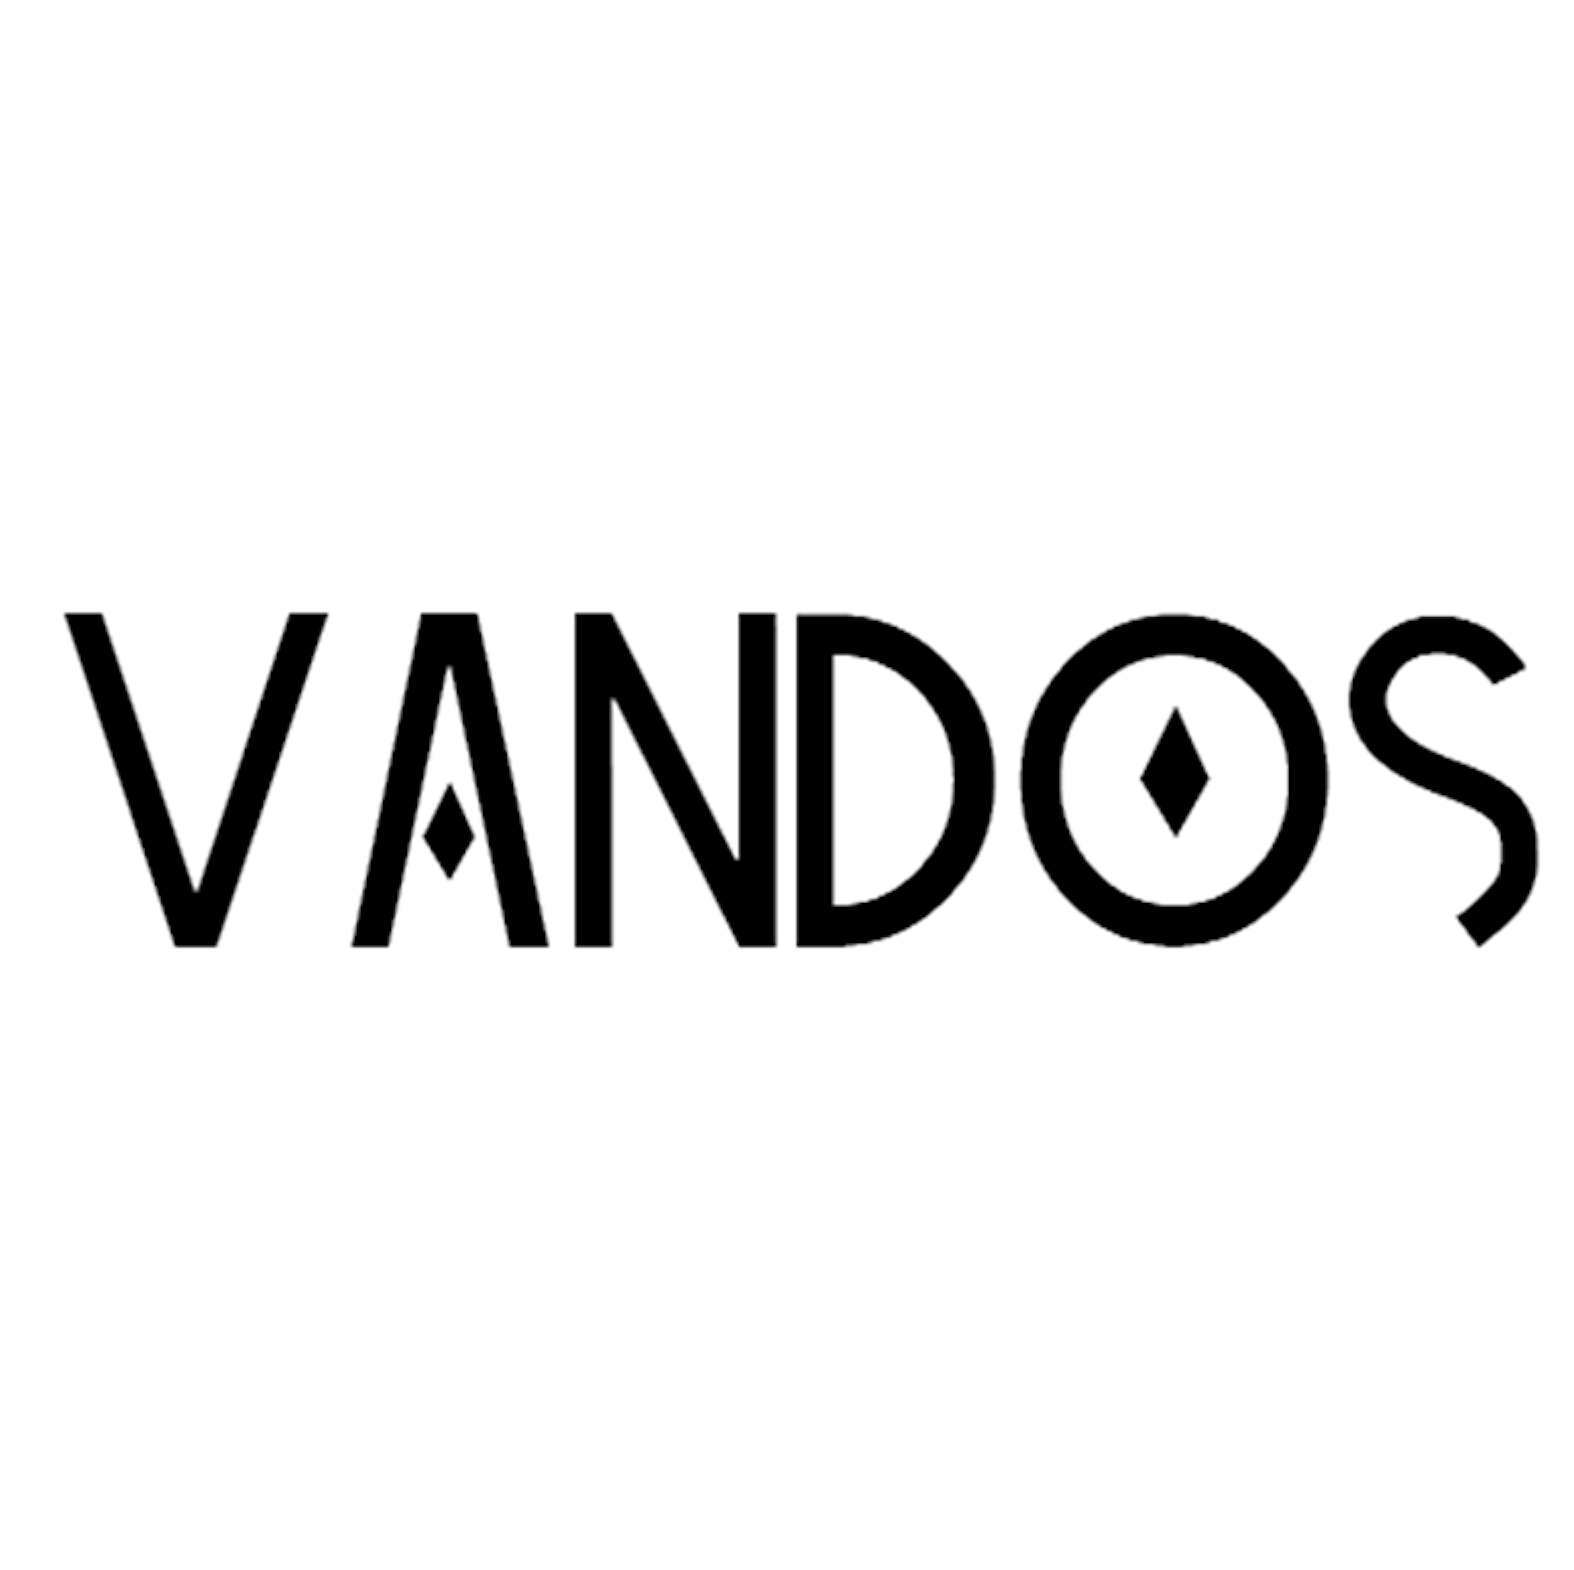 VANDOS logo